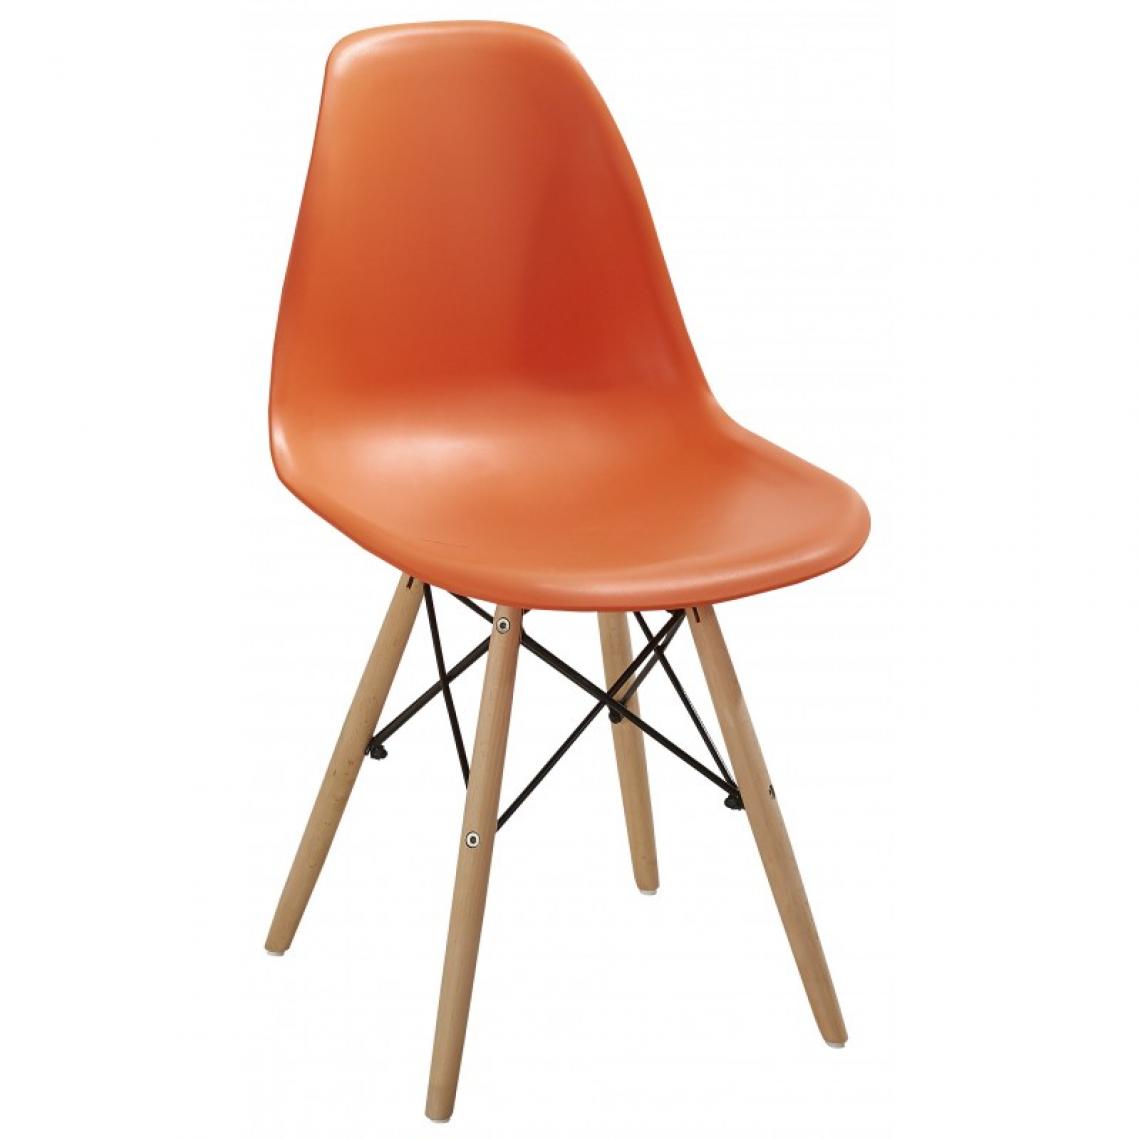 Webmarketpoint - Chaise moderne en polypropylène et bois ligne Momo orange - Chaises